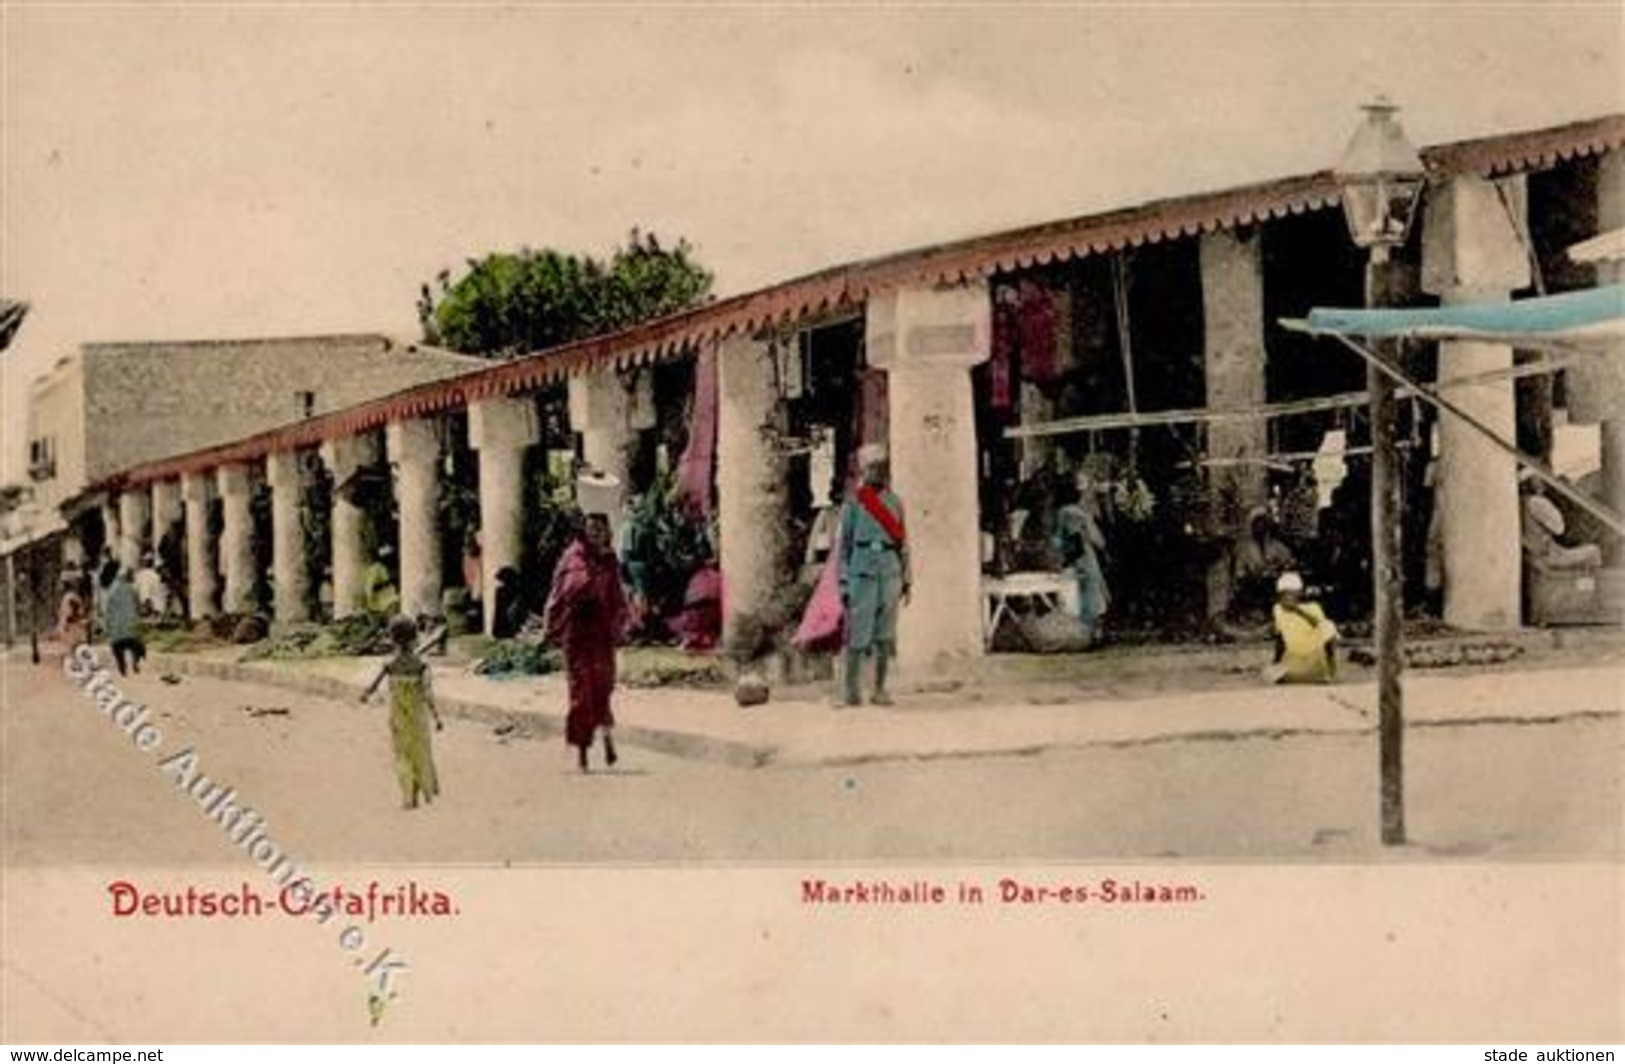 Kolonien Deutsch Ostafrika Dar-es-Salaam Markthalle I-II Colonies - History